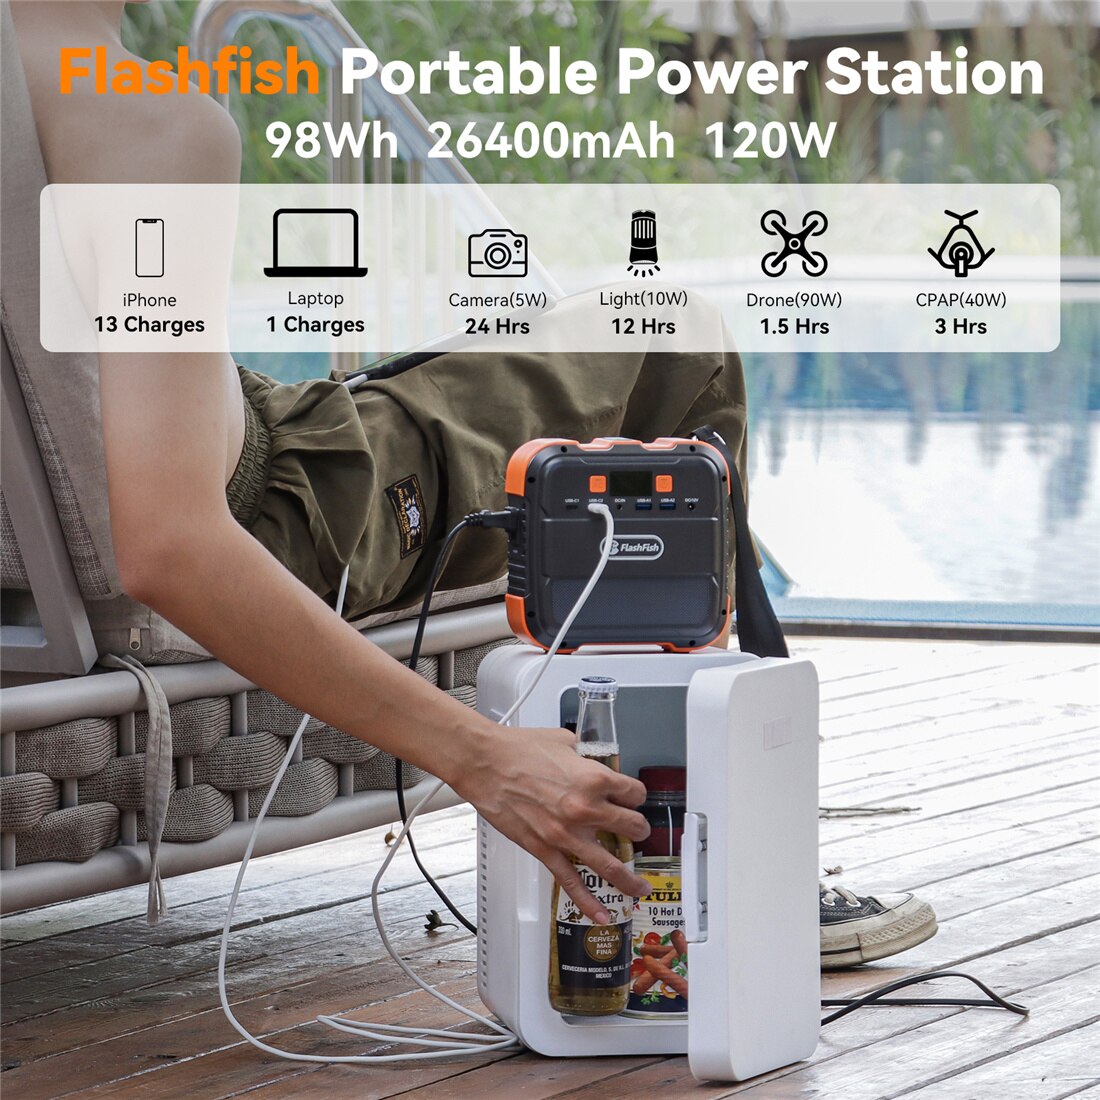 lSfish Portable Power Station 98Wh 26400mAh